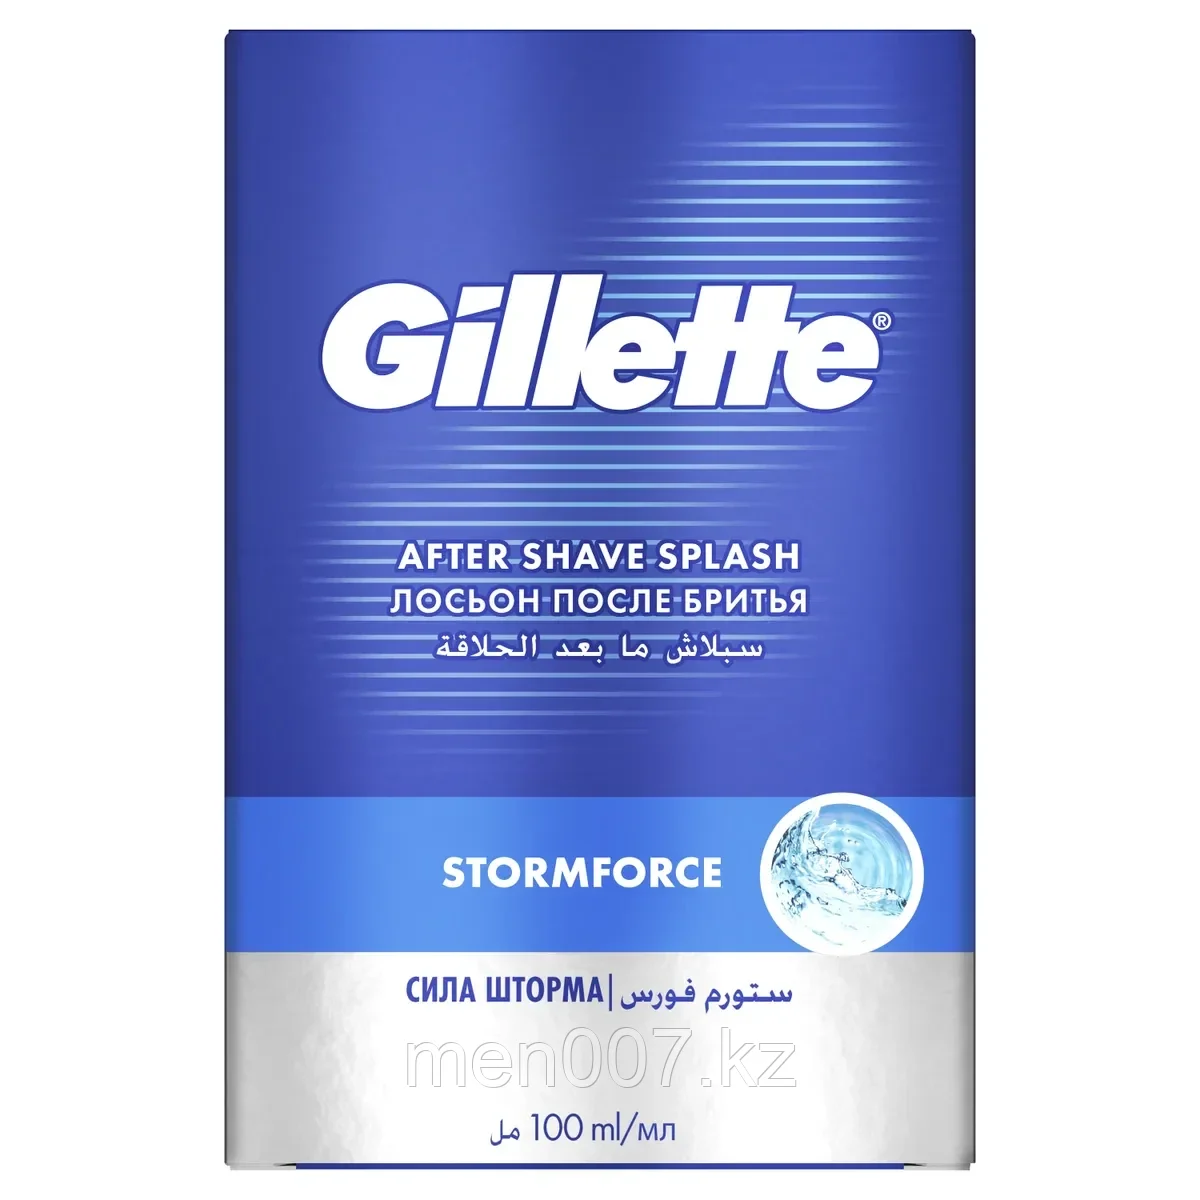 Gillette Series StormForce (Лосьон после бритья) (Сила Шторма) 100 мл